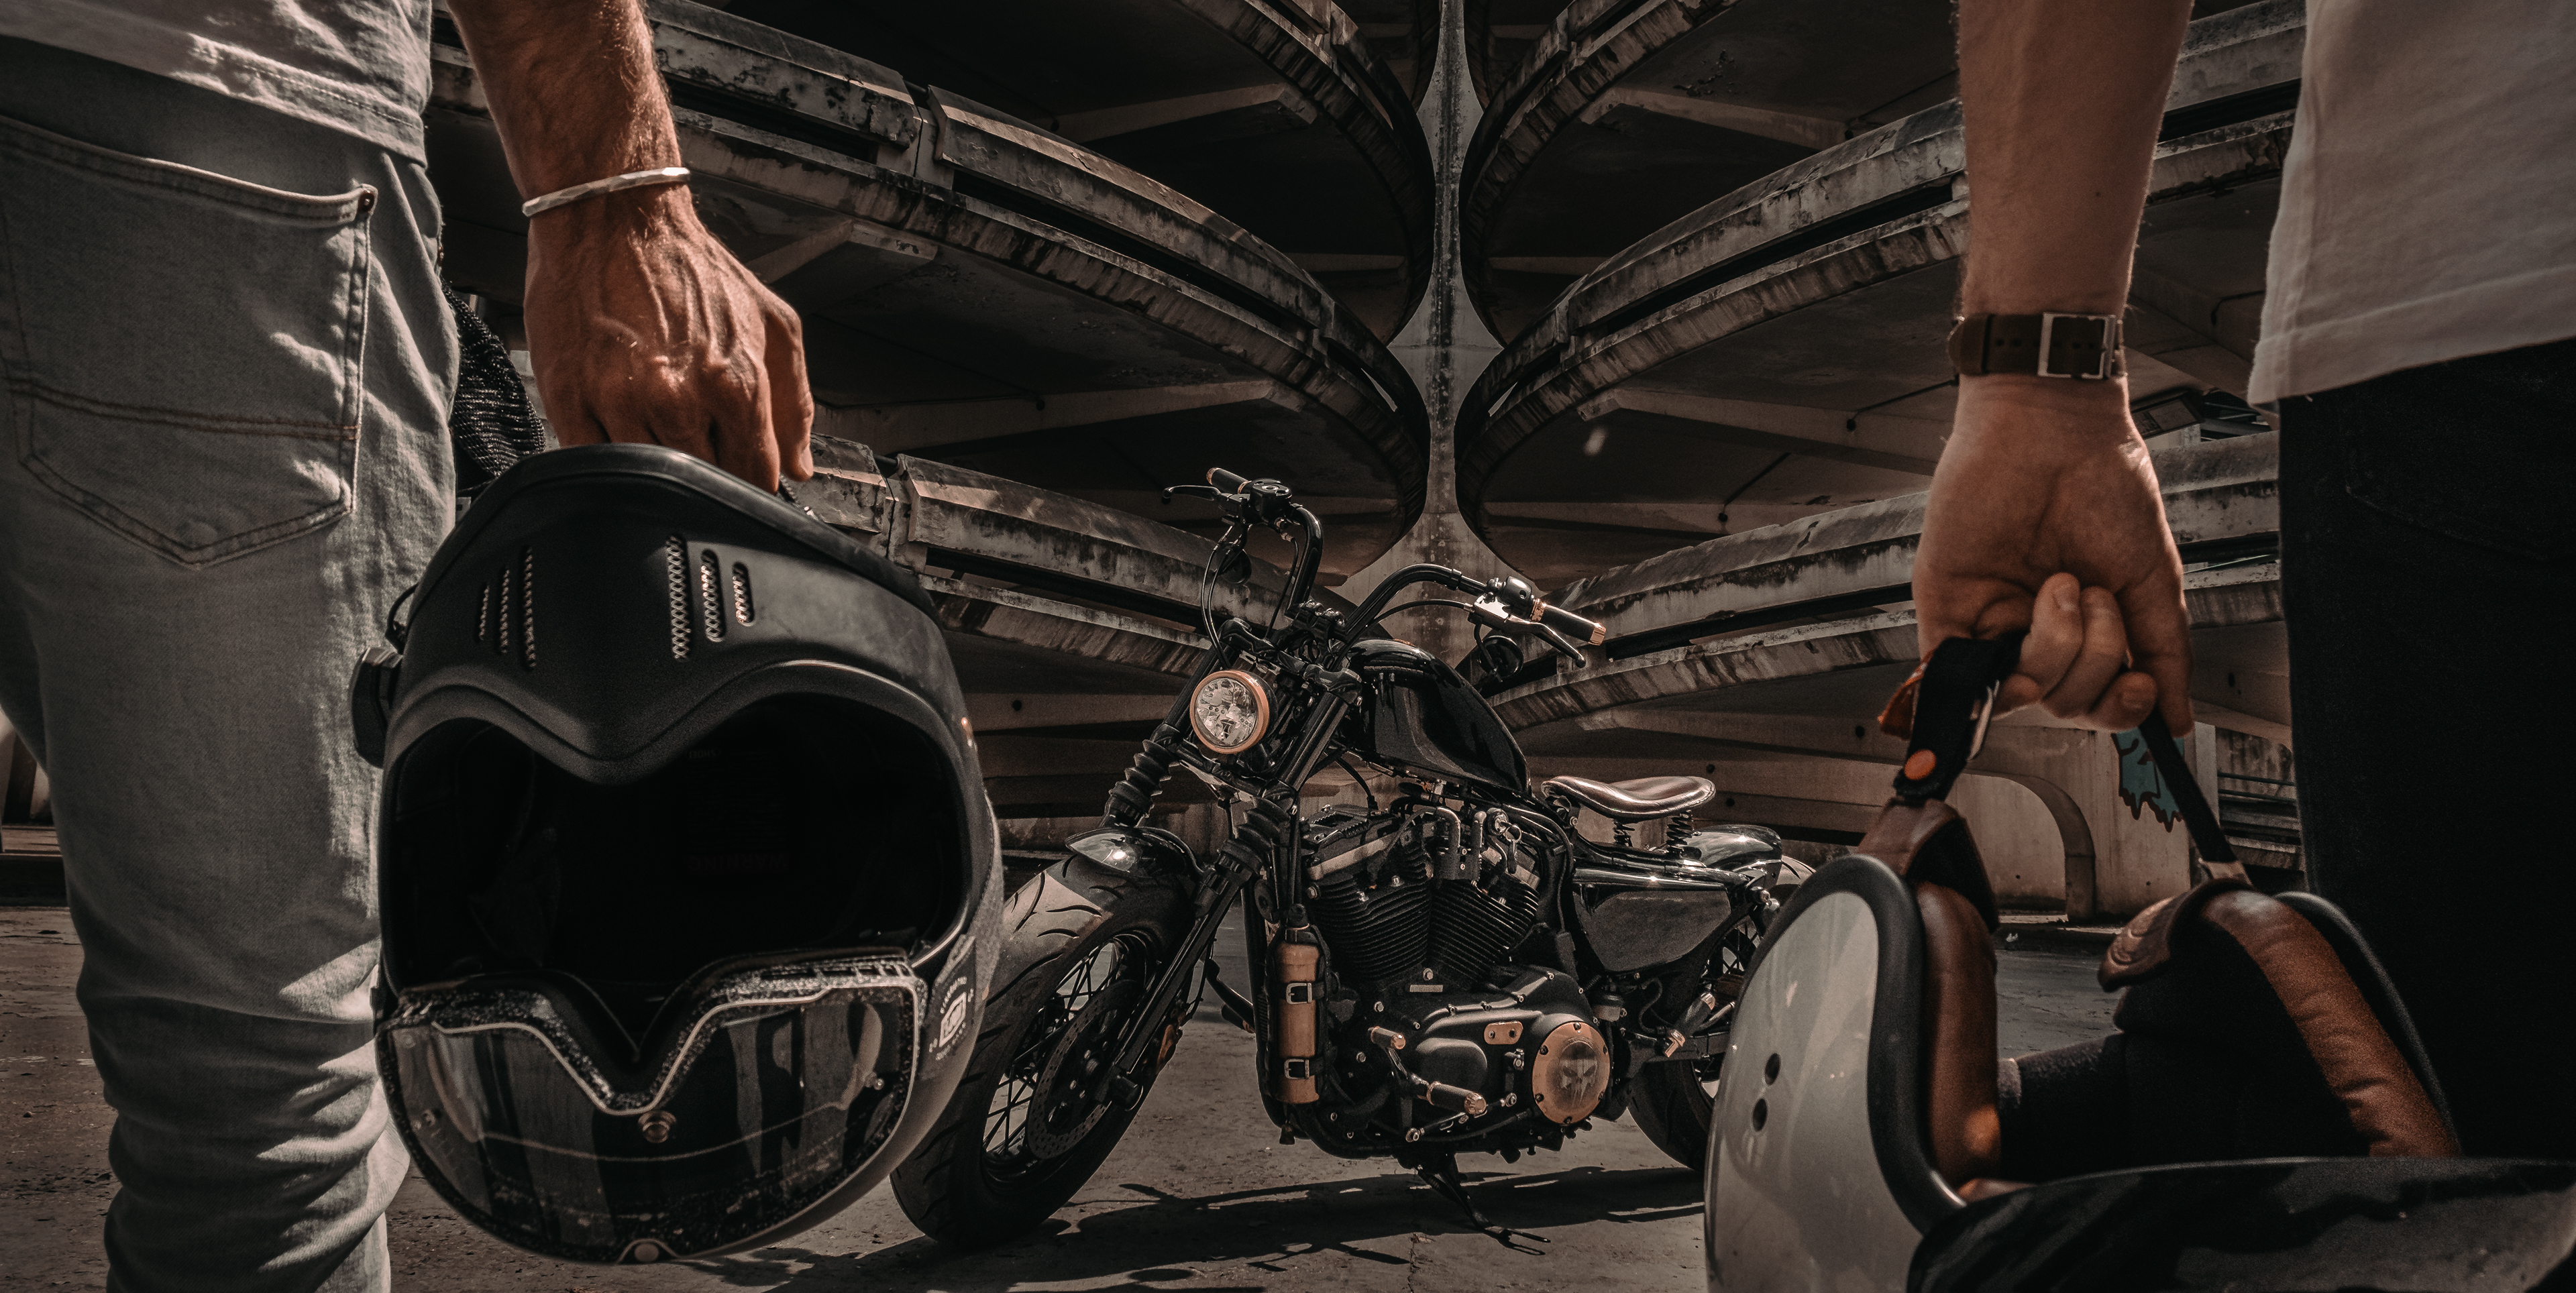 automotive-Bike-biker-cinematic-Davidson-harley-Motor-motorcycl-2